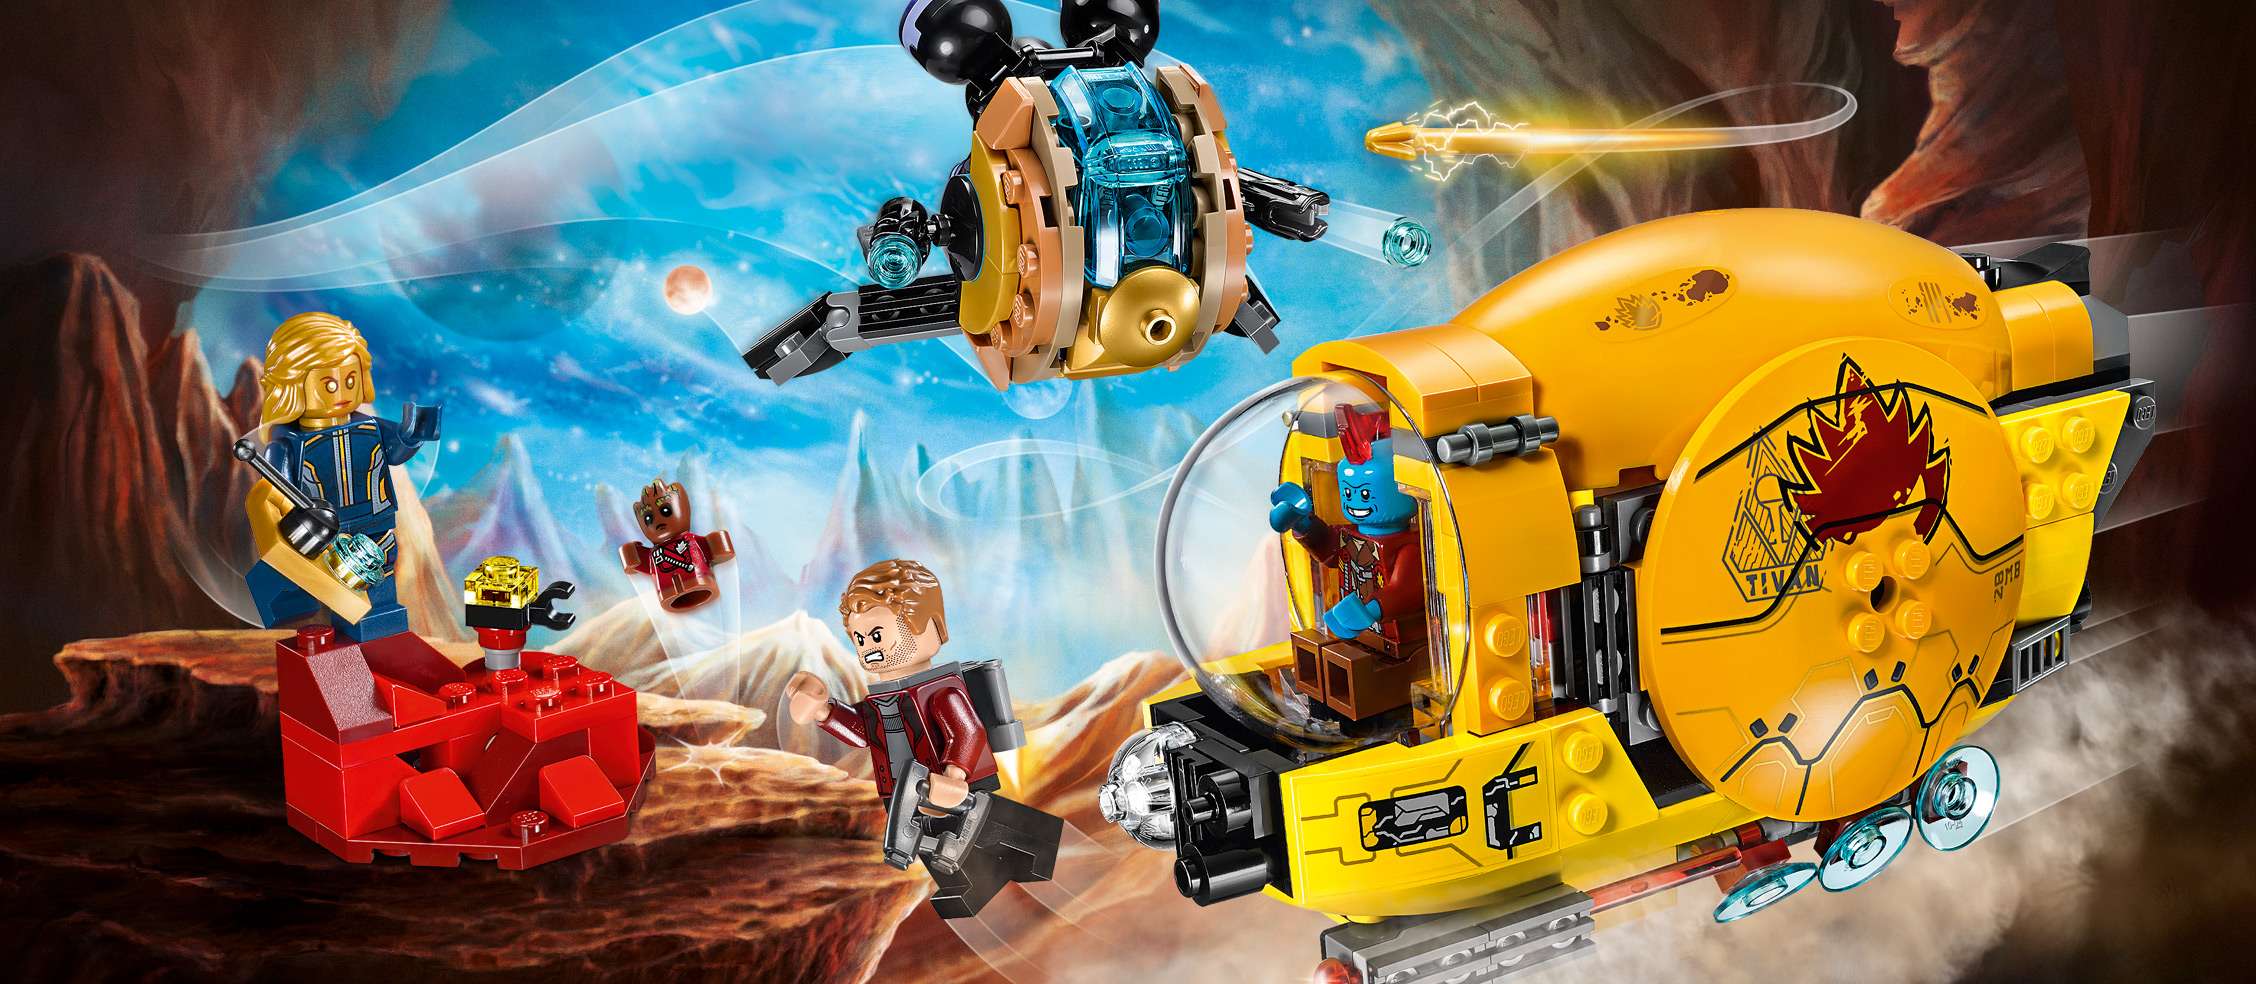 HQ LEGO Marvel Super Heroes Wallpapers | File 869.58Kb